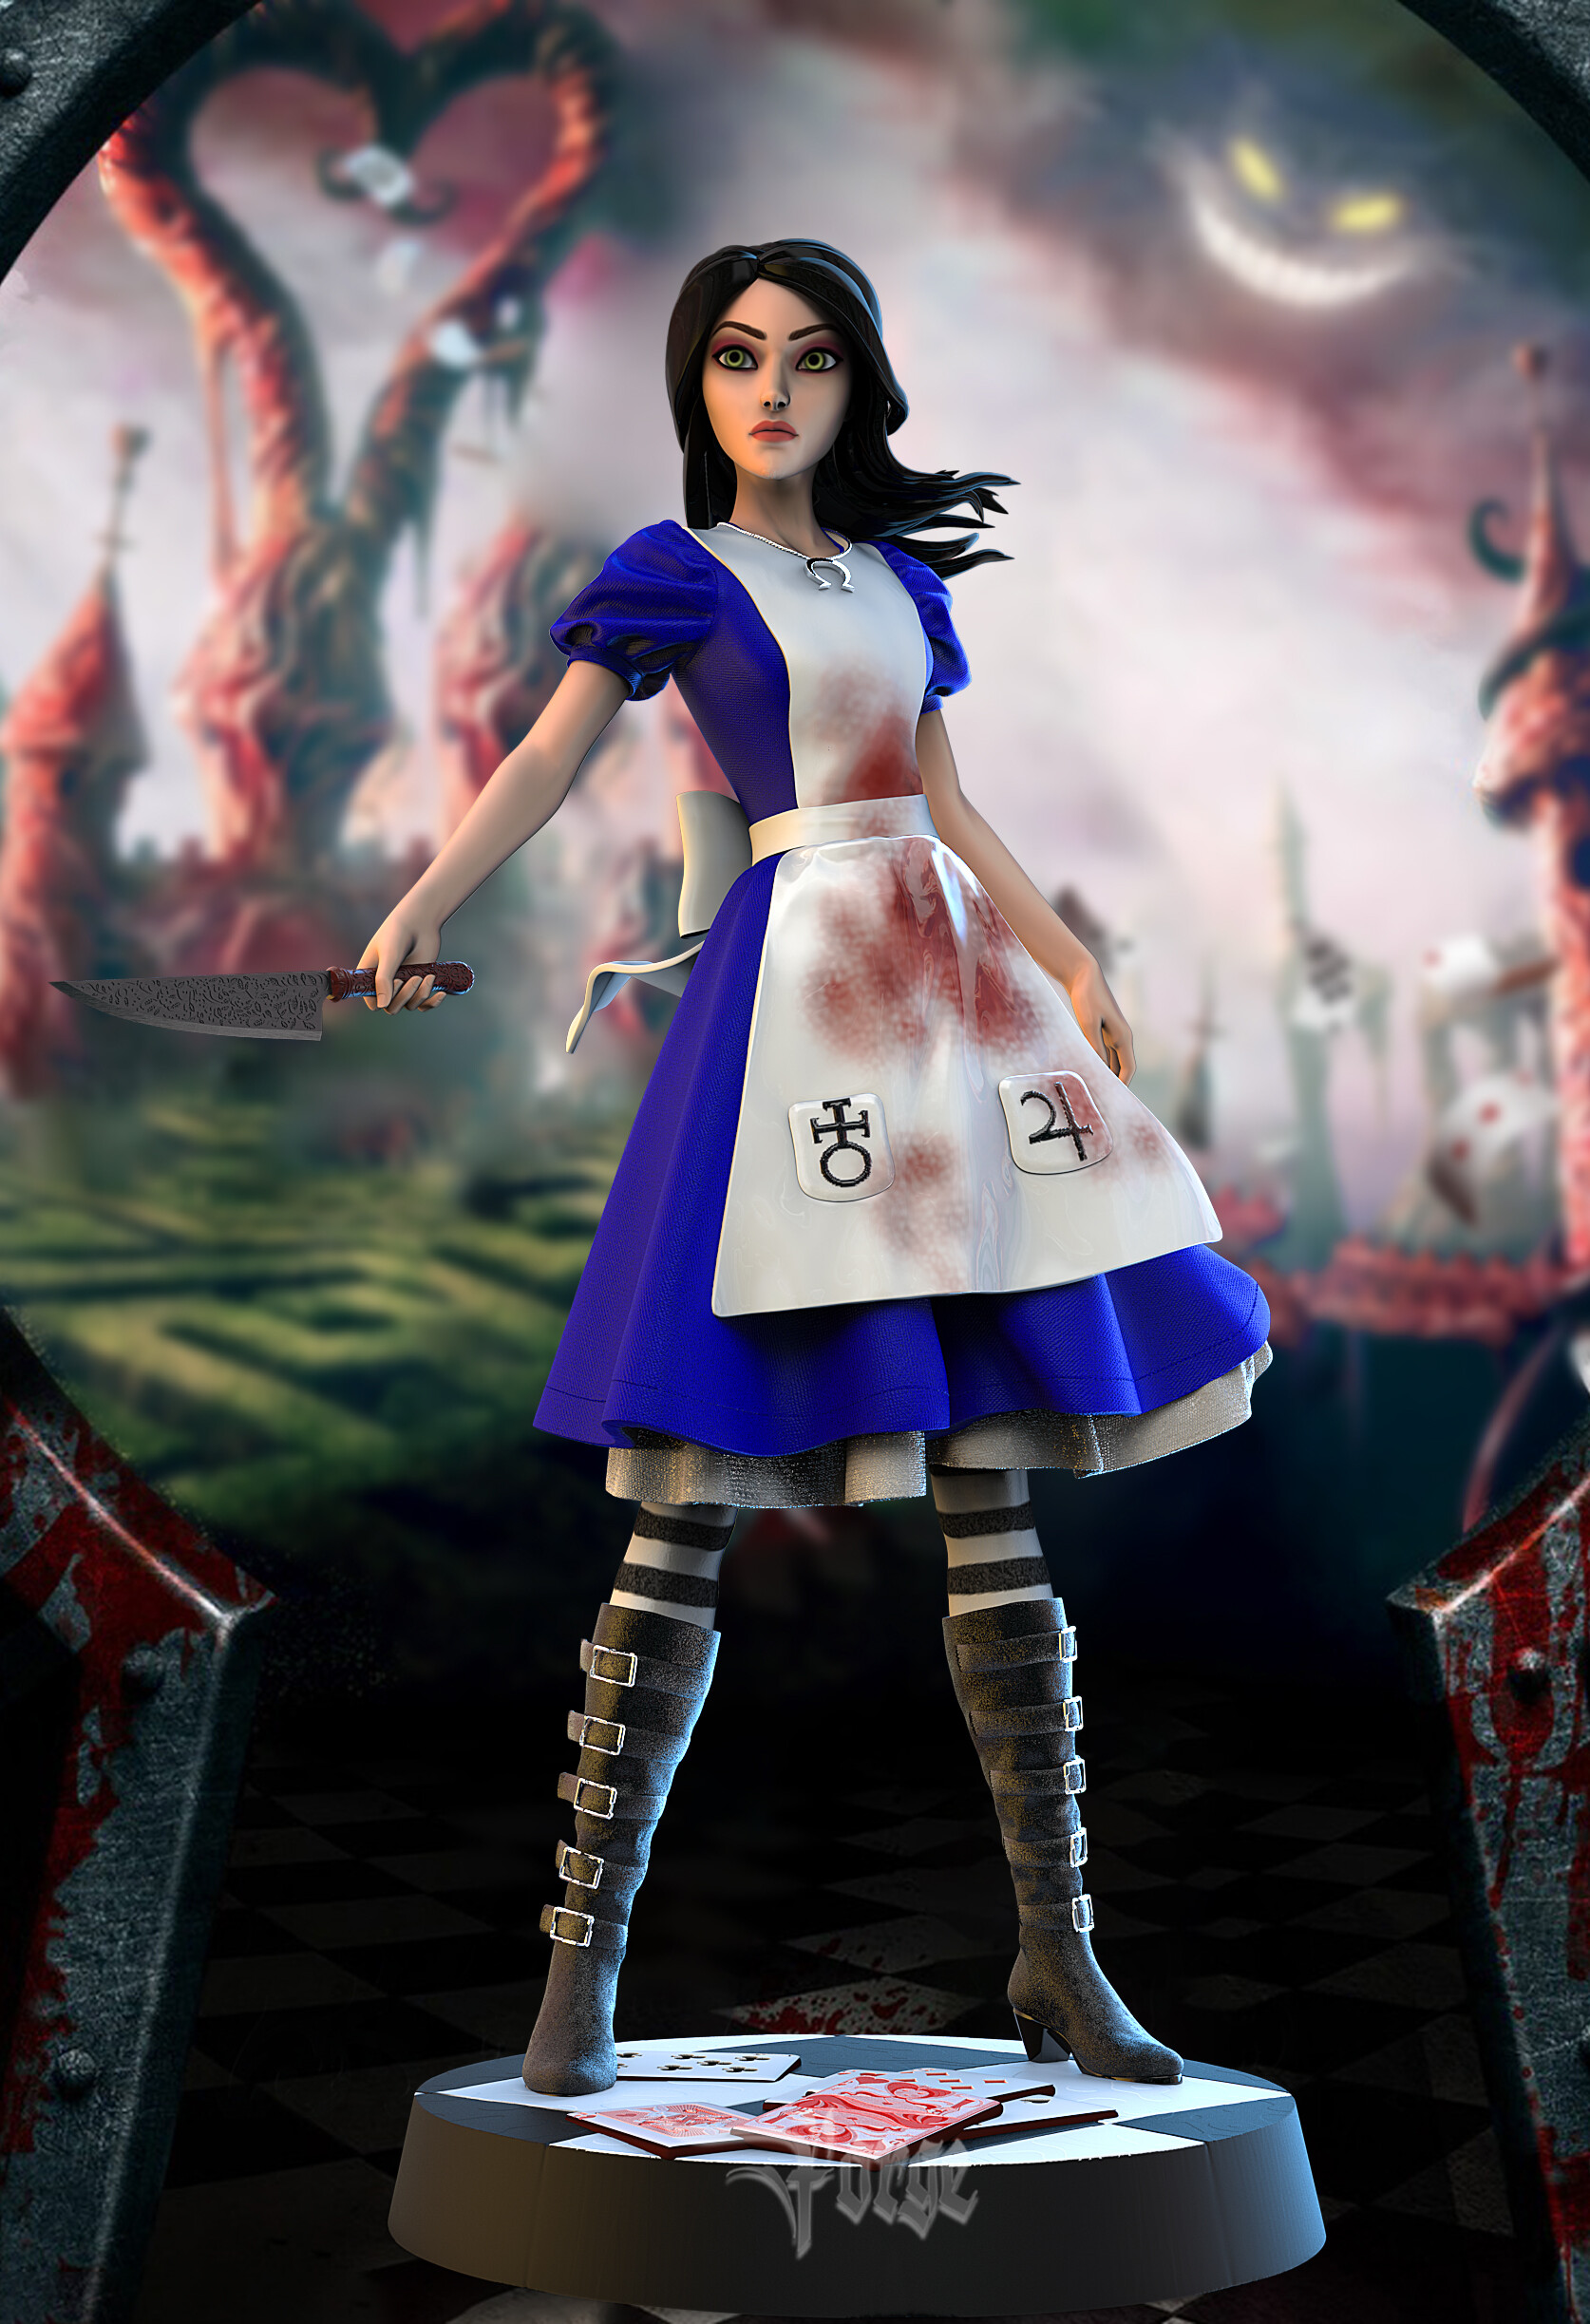 ArtStation - Alice: Madness Returns